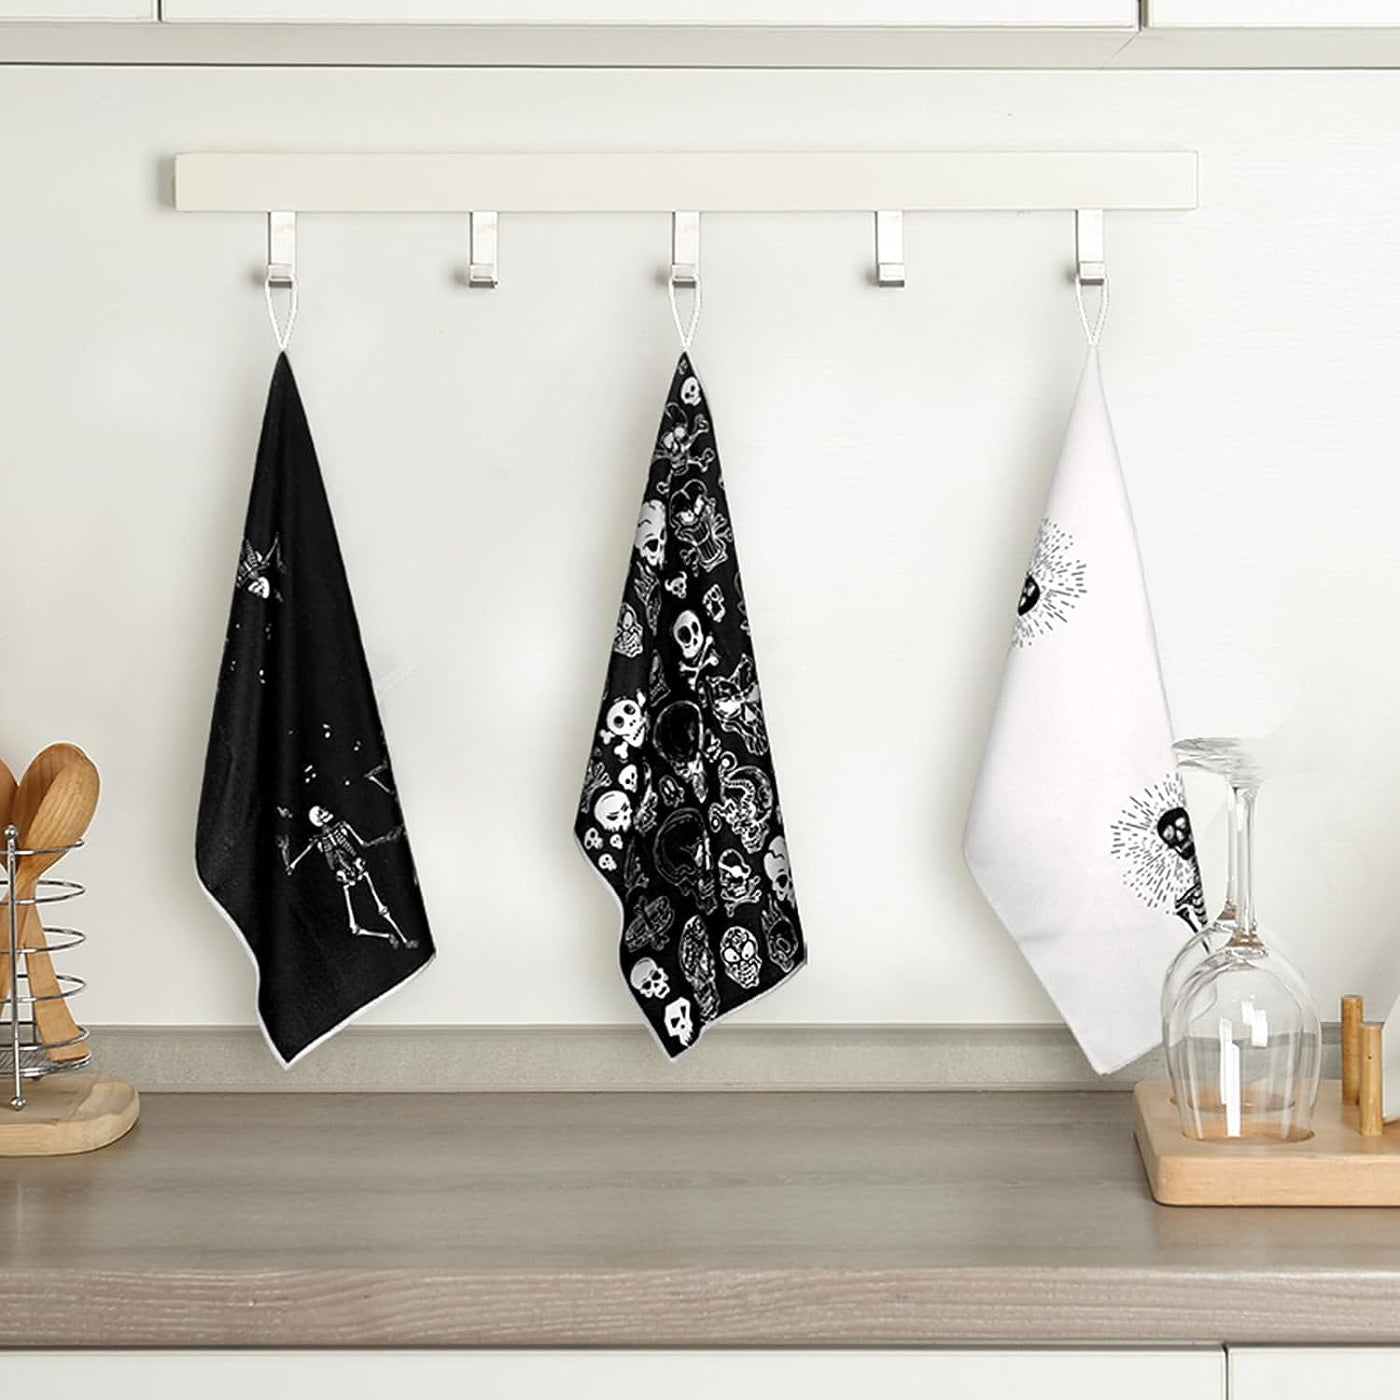 6 Pcs Dish Hand Towel Decorative Kitchen Towel